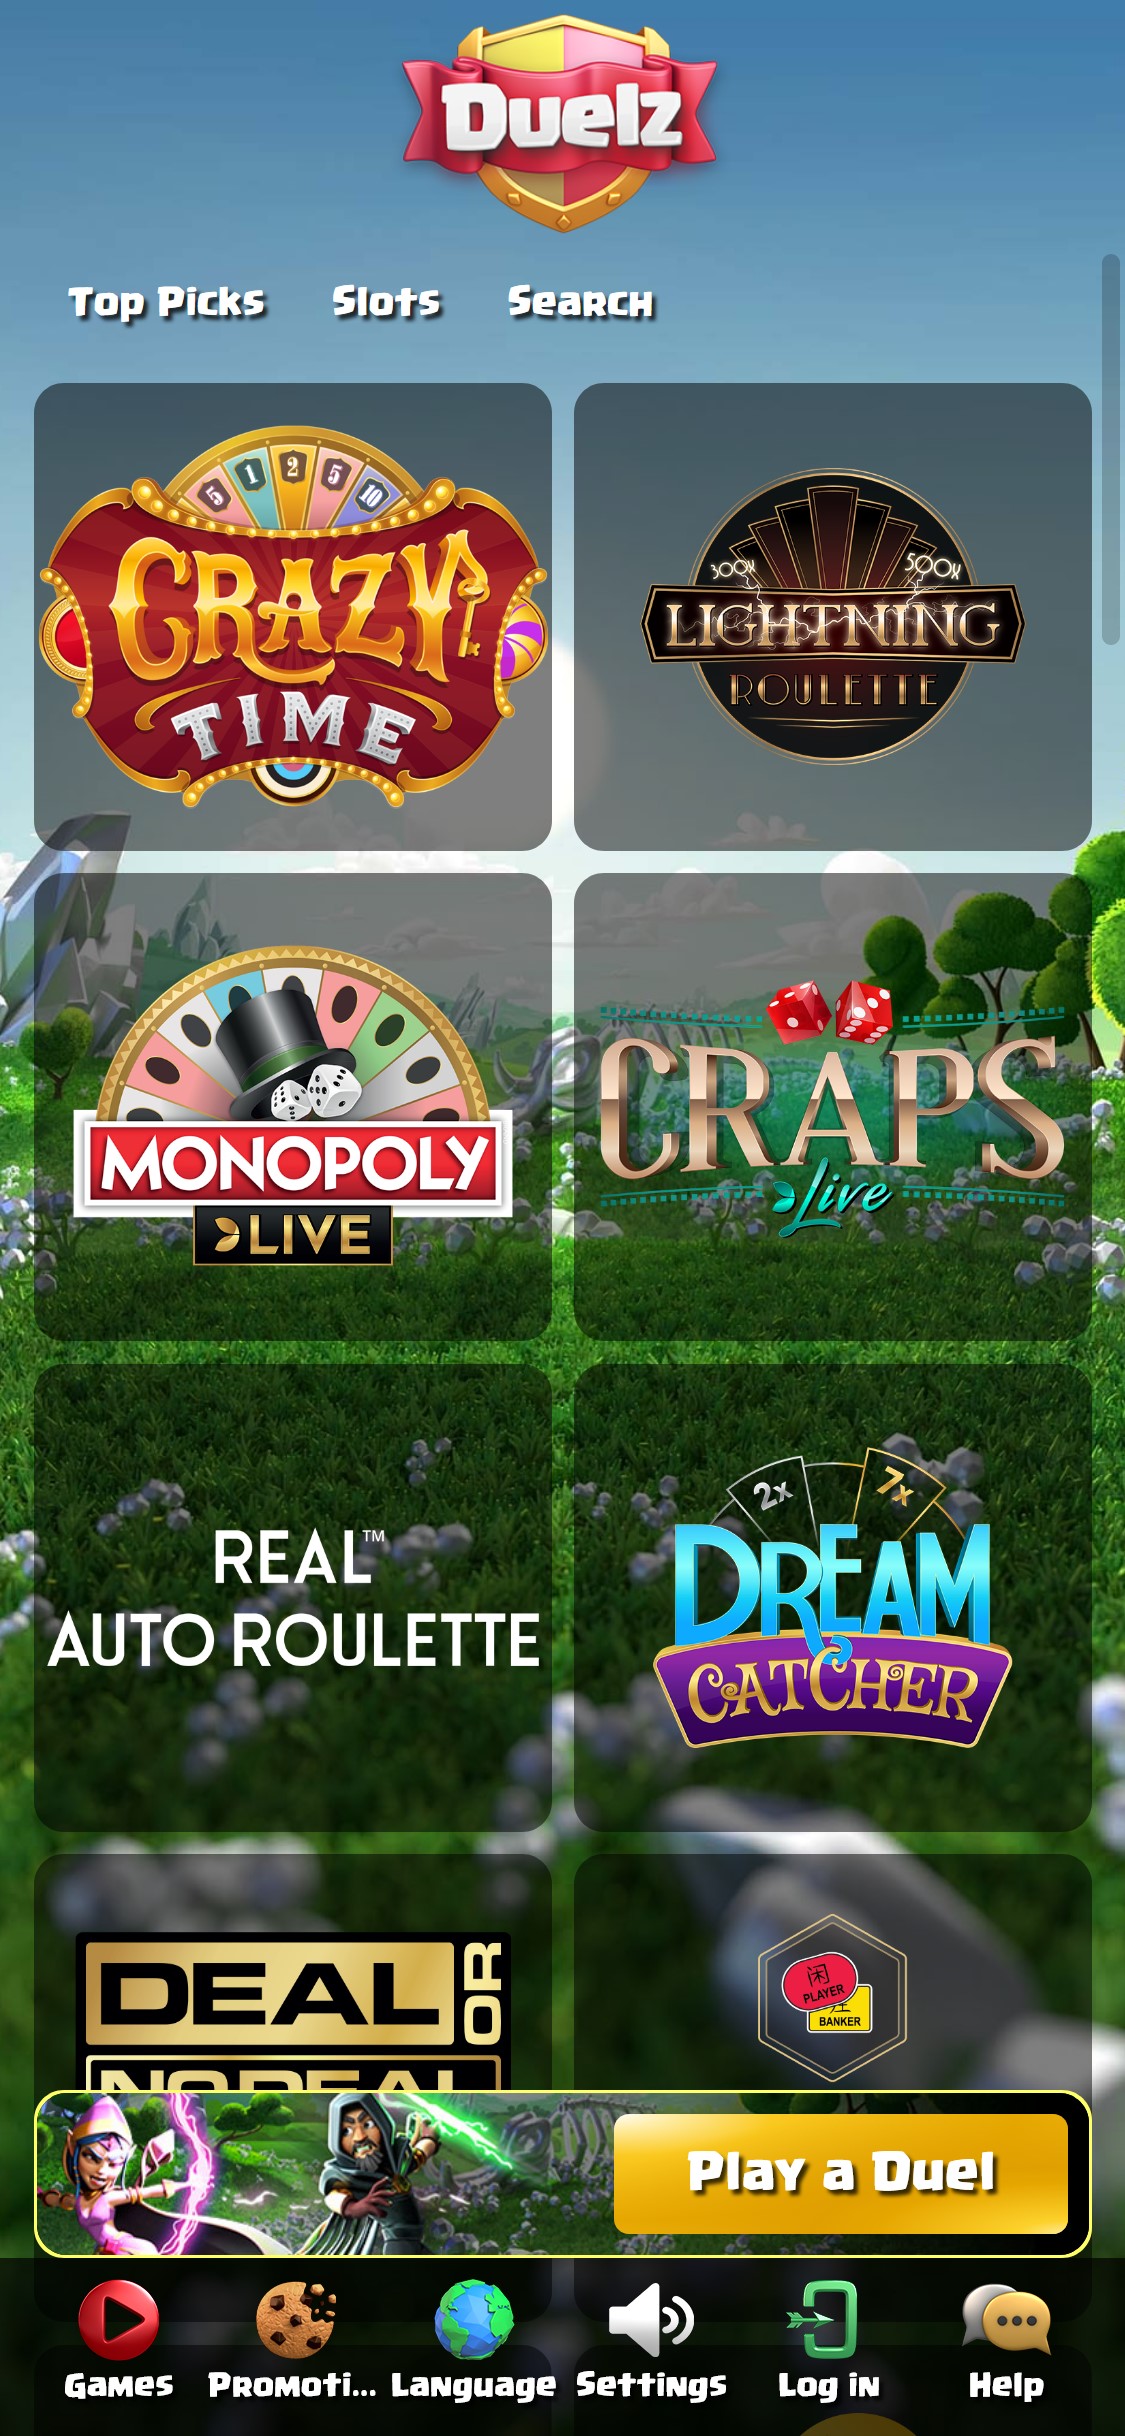 Duelz Casino Mobile Live Dealer Games Review